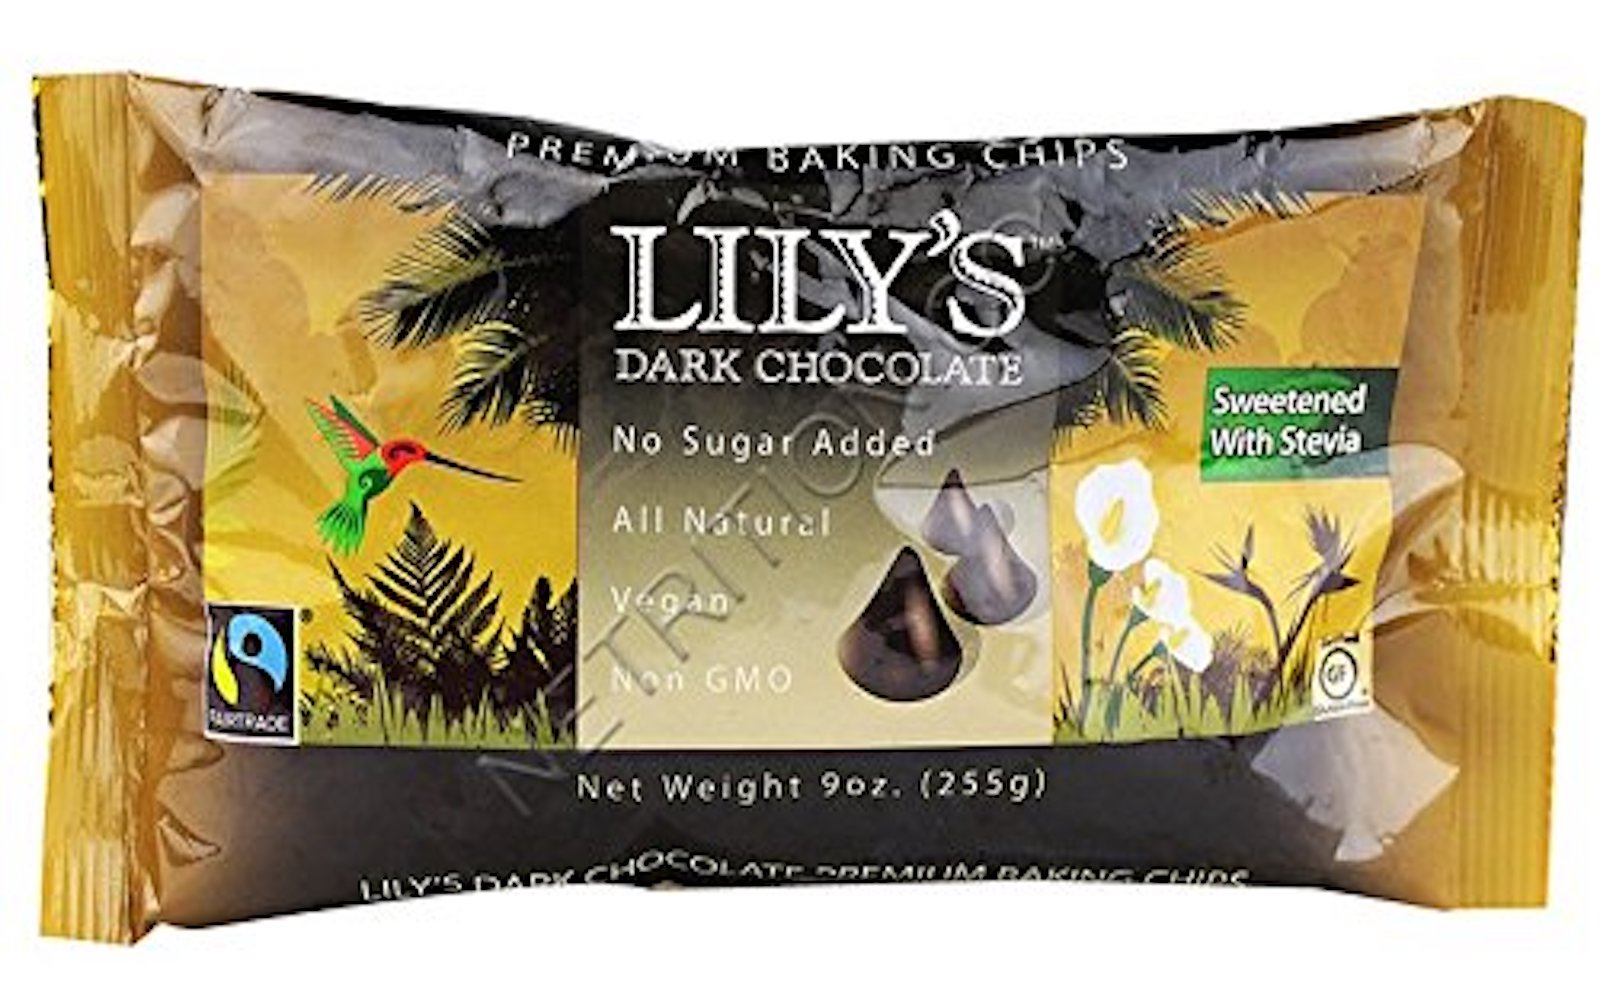 lilys dark chocolate premium baking chips 